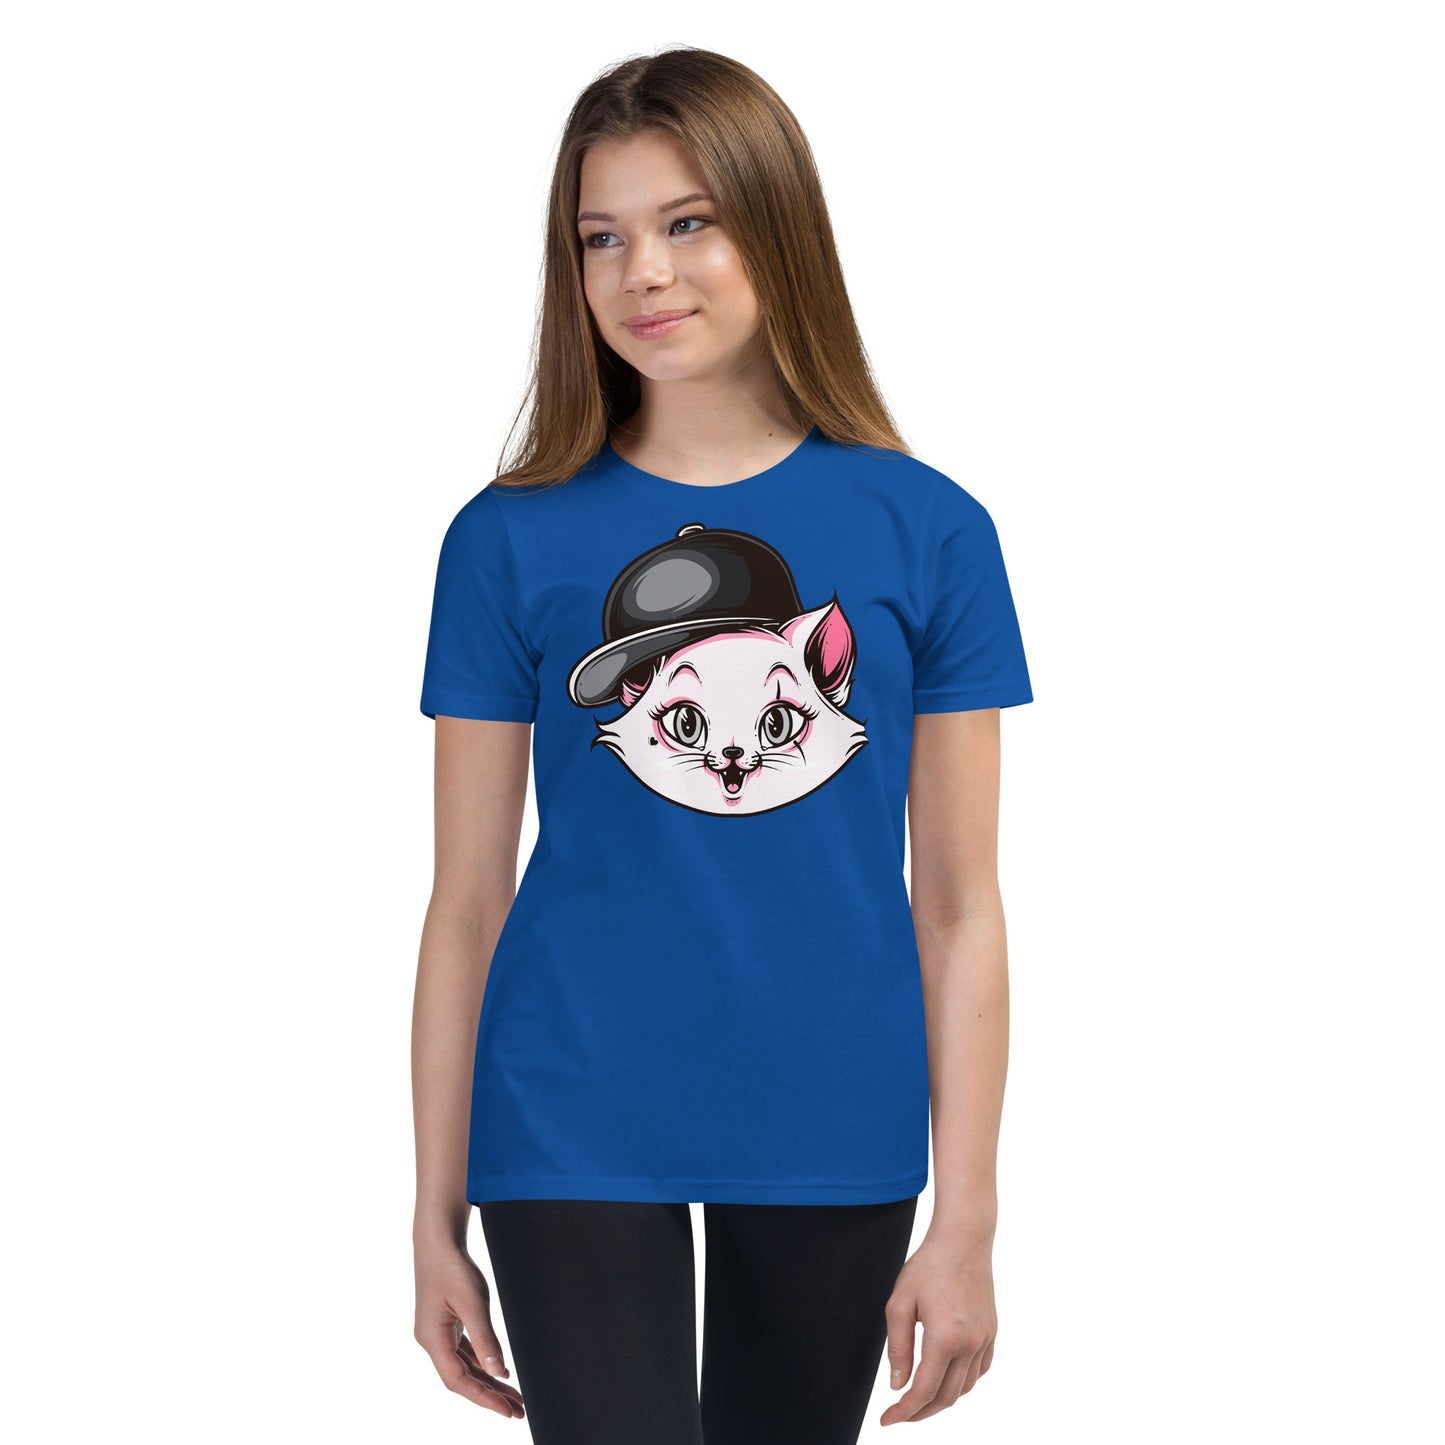 Cute Hip-hop Style Cat T-shirt, No. 0203